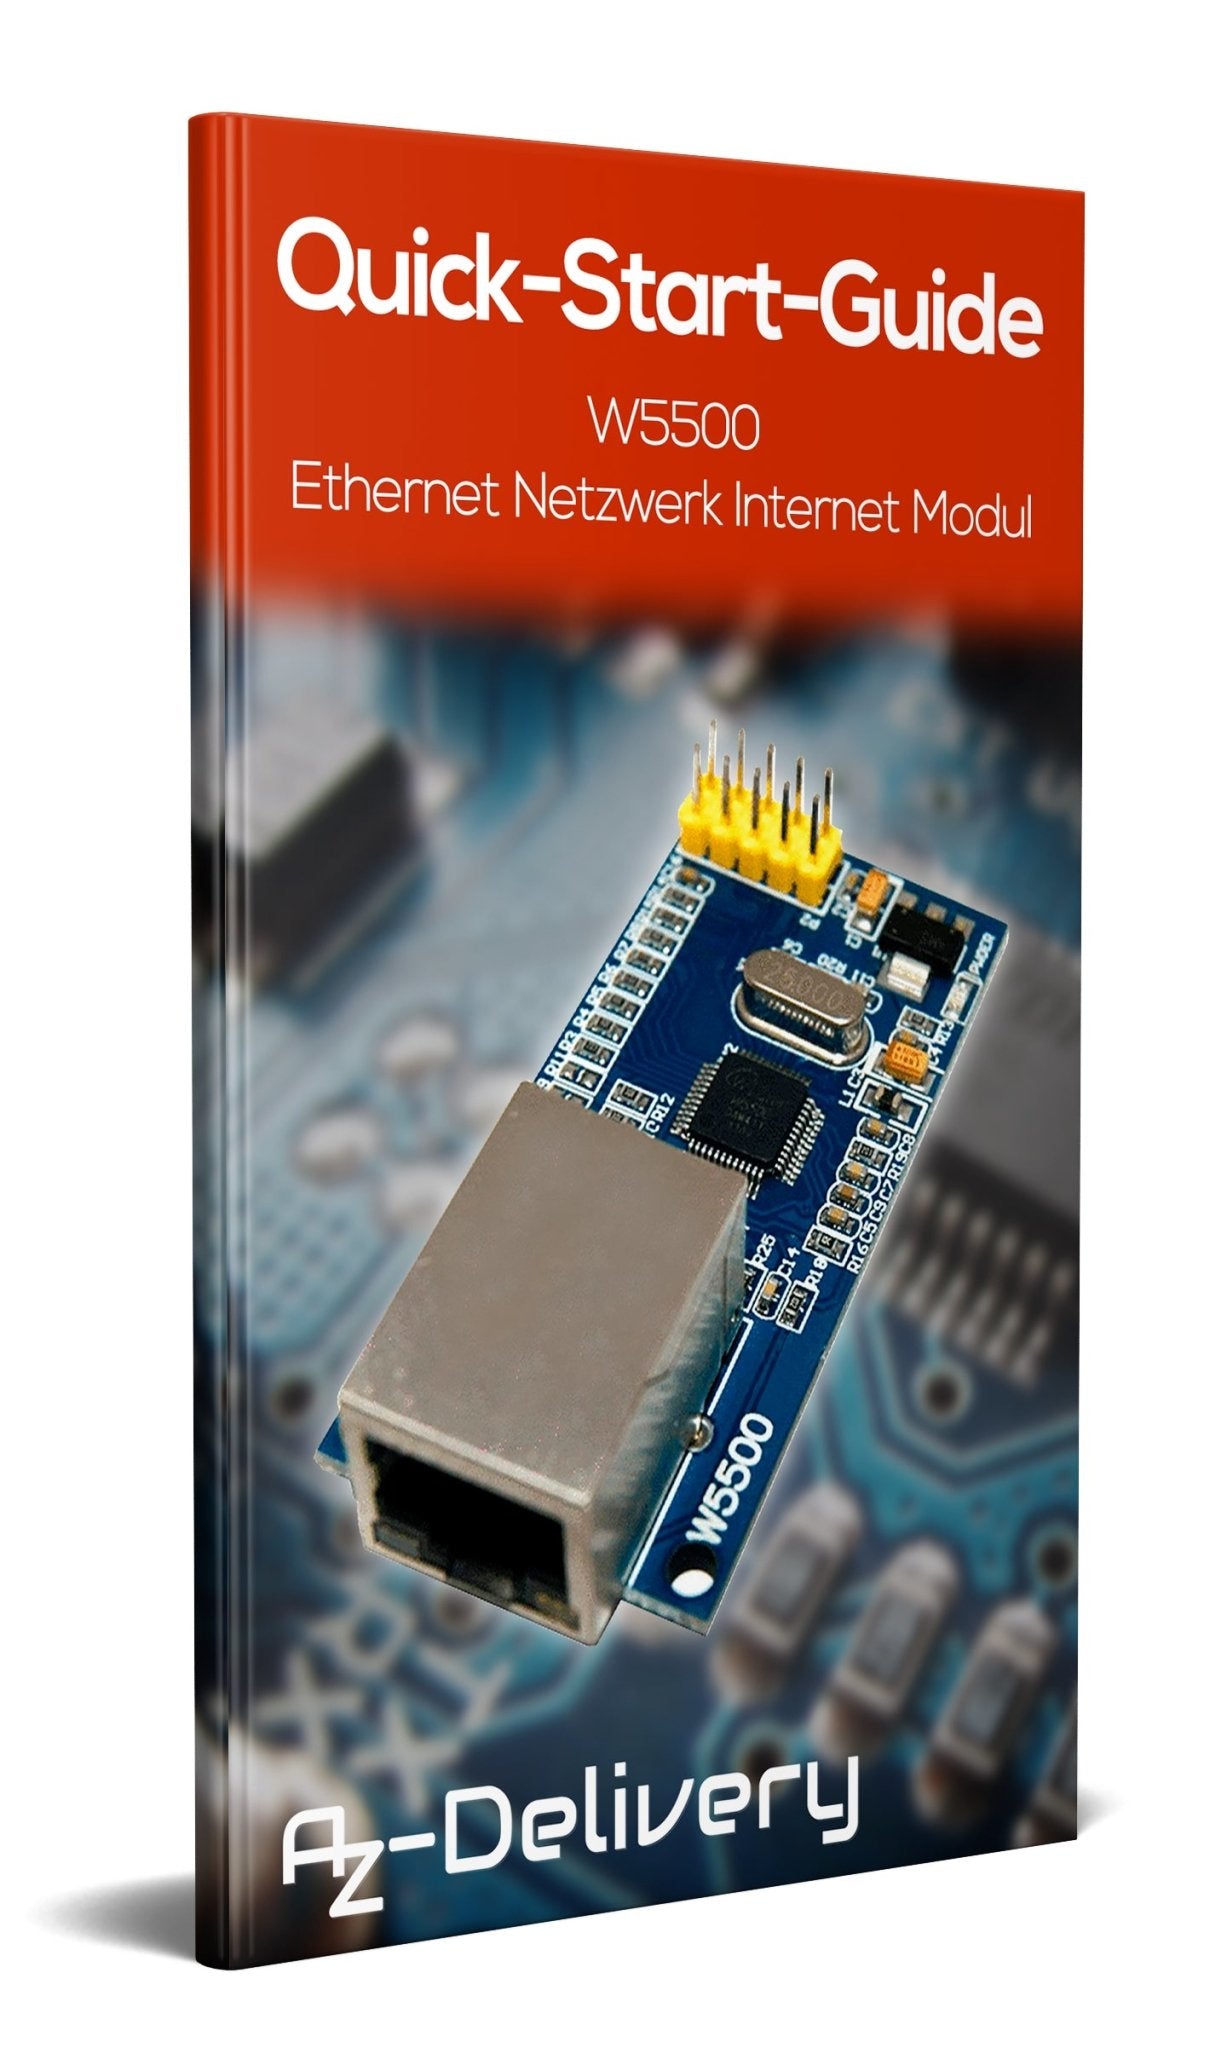 W5500 Ethernet Netzwerk Internet Modul - AZ-Delivery